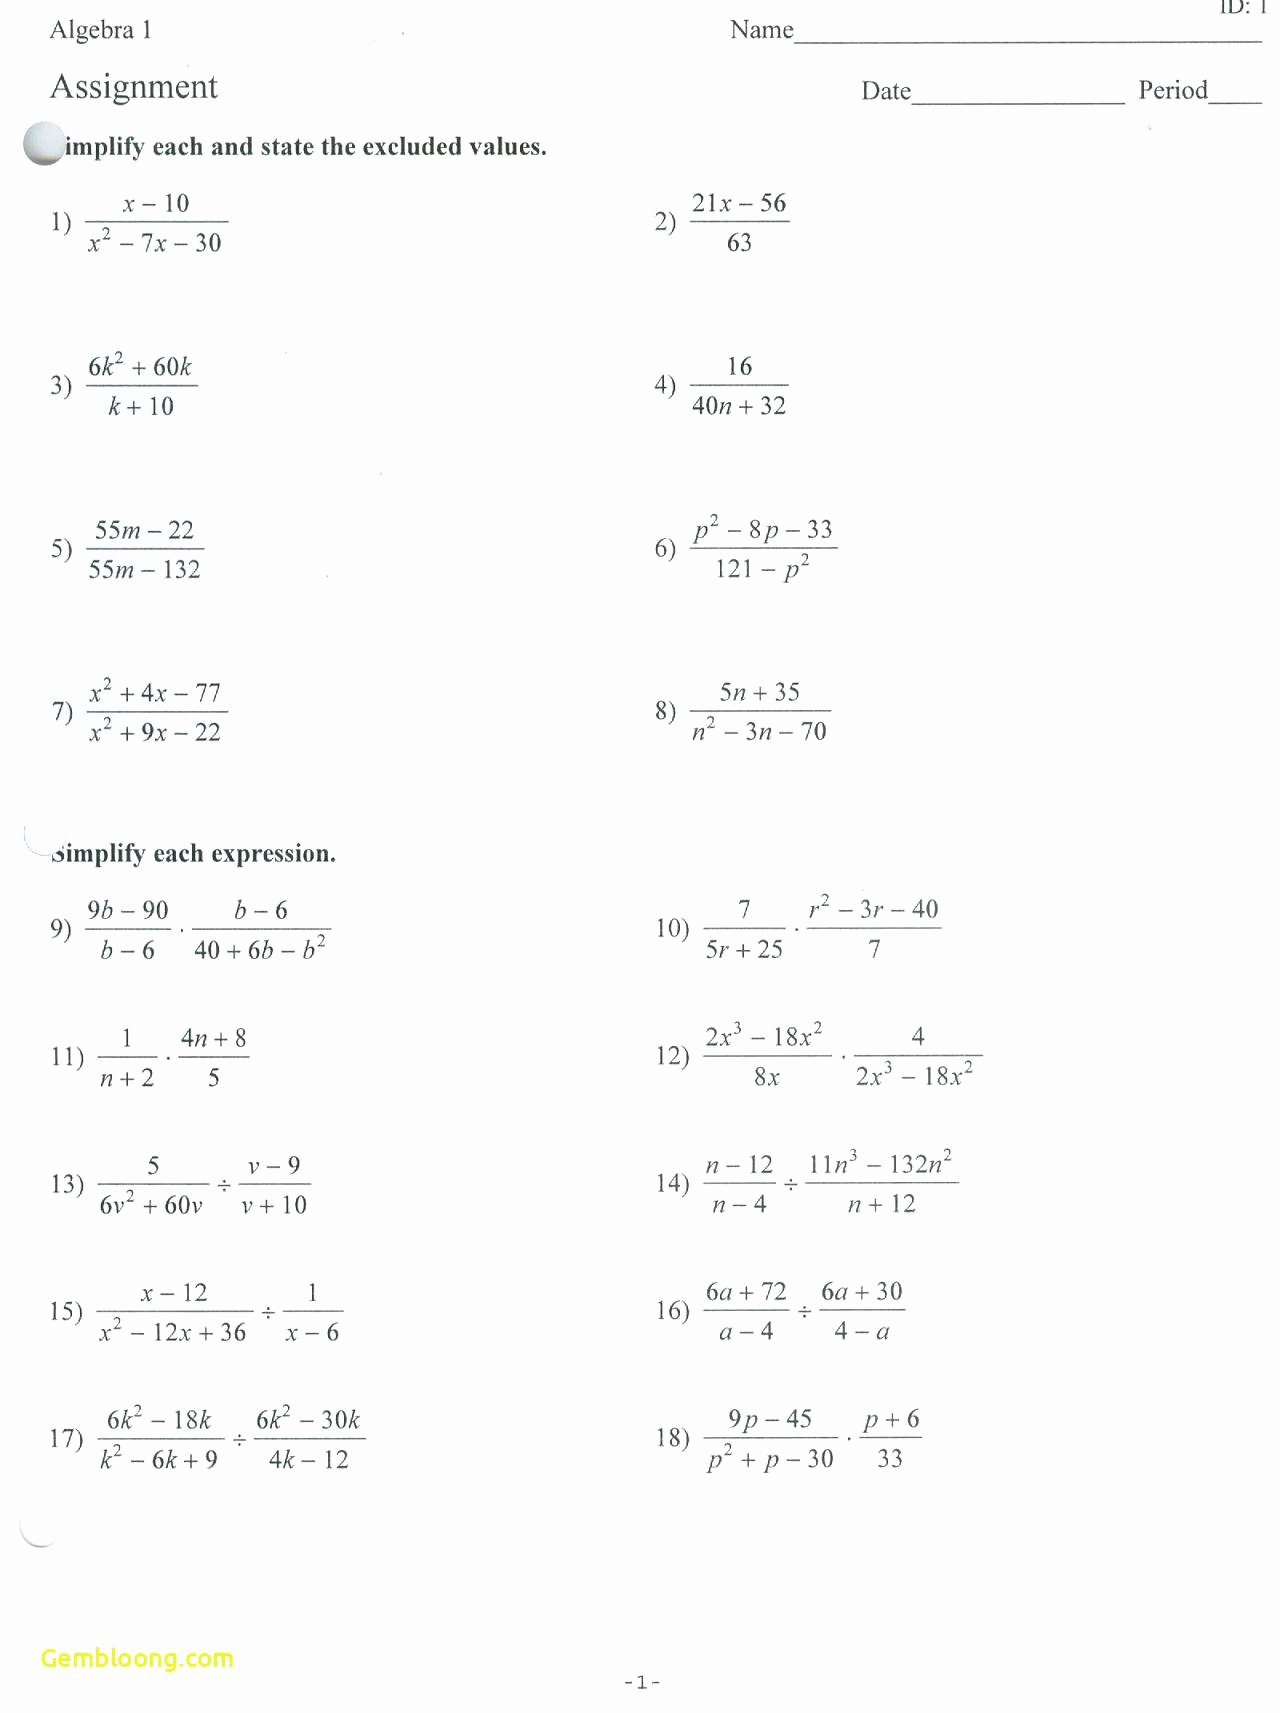 Graphing Quadratics Worksheet Answers Elegant Graphing Quadratics Review Worksheet Answers